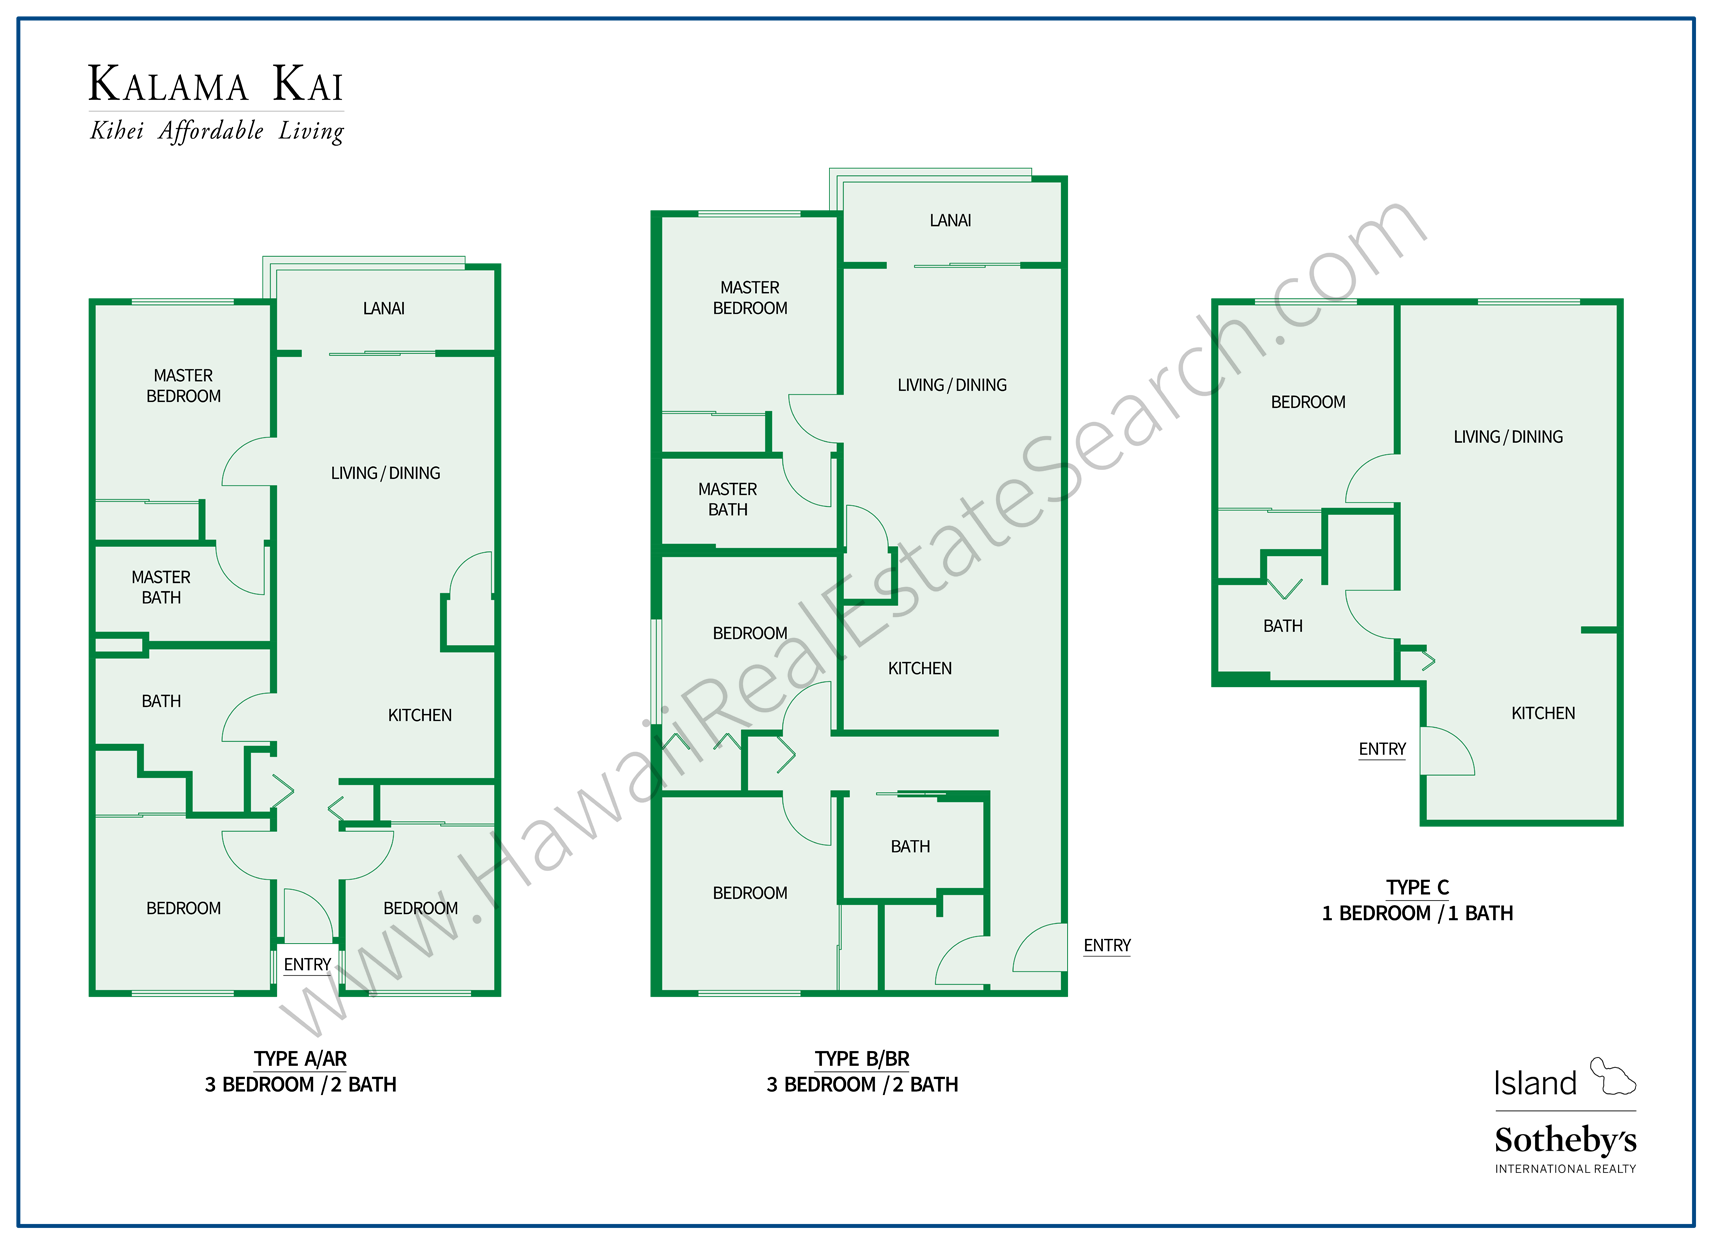 kalama kai floor plans